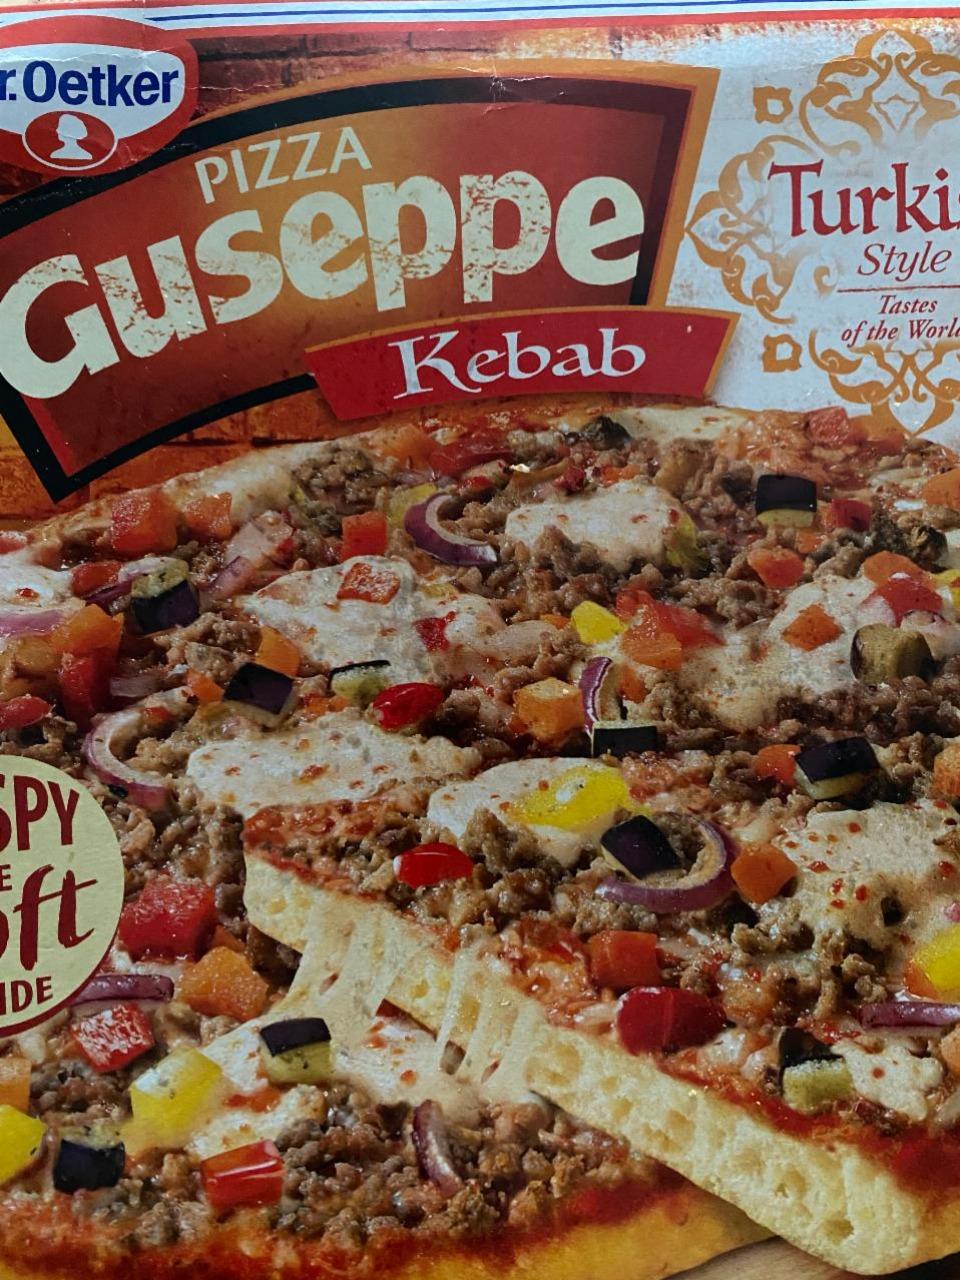 Фото - Pizza guseppe kebab turkish style Dr.Oetker